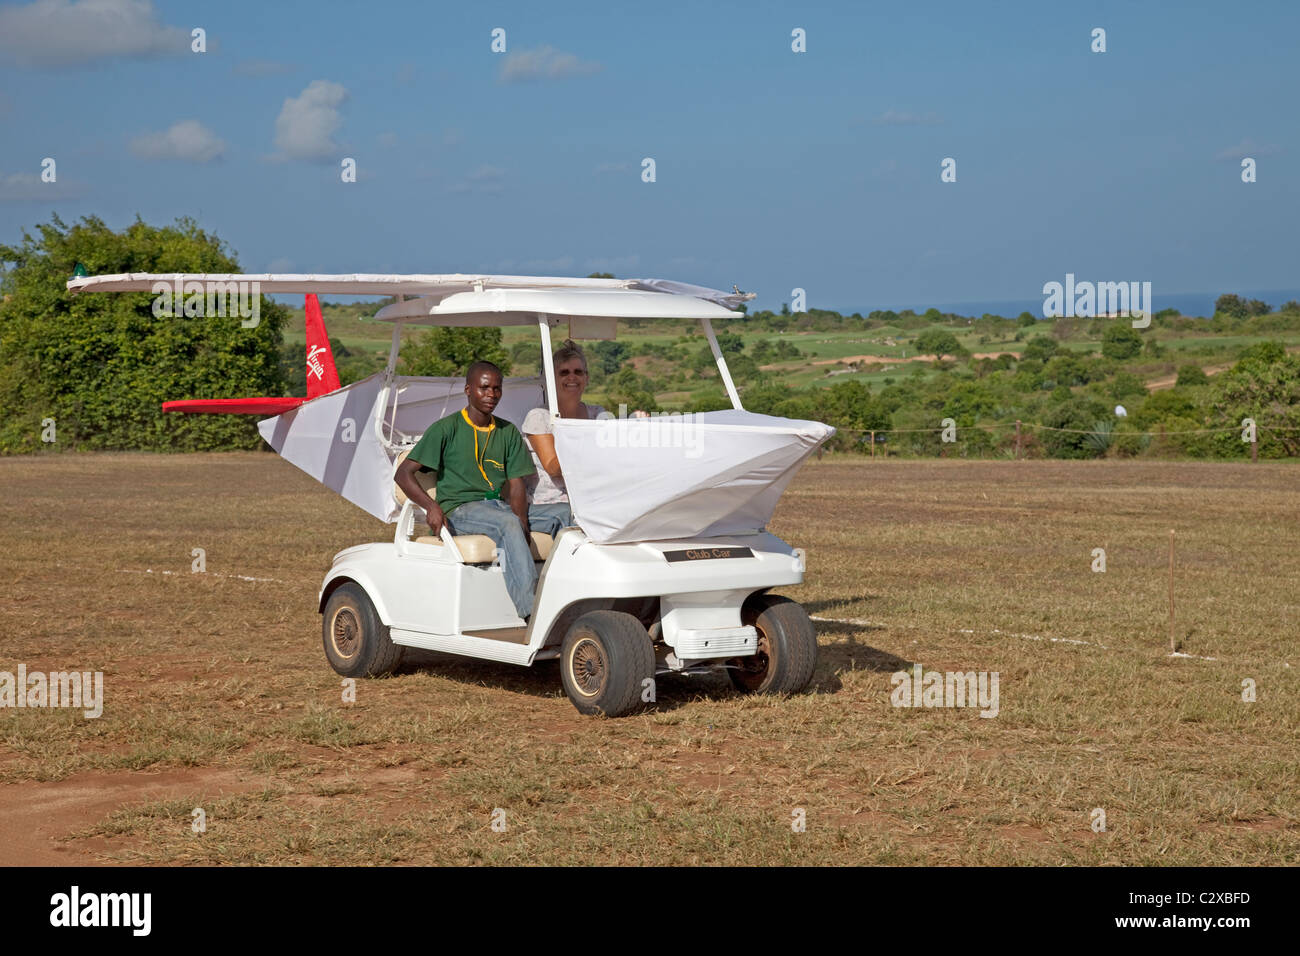 Virgin Atlantic avion buggy donnant randonnées durables Vipingo Ridge Golf Tournament Kenya 2010 Banque D'Images